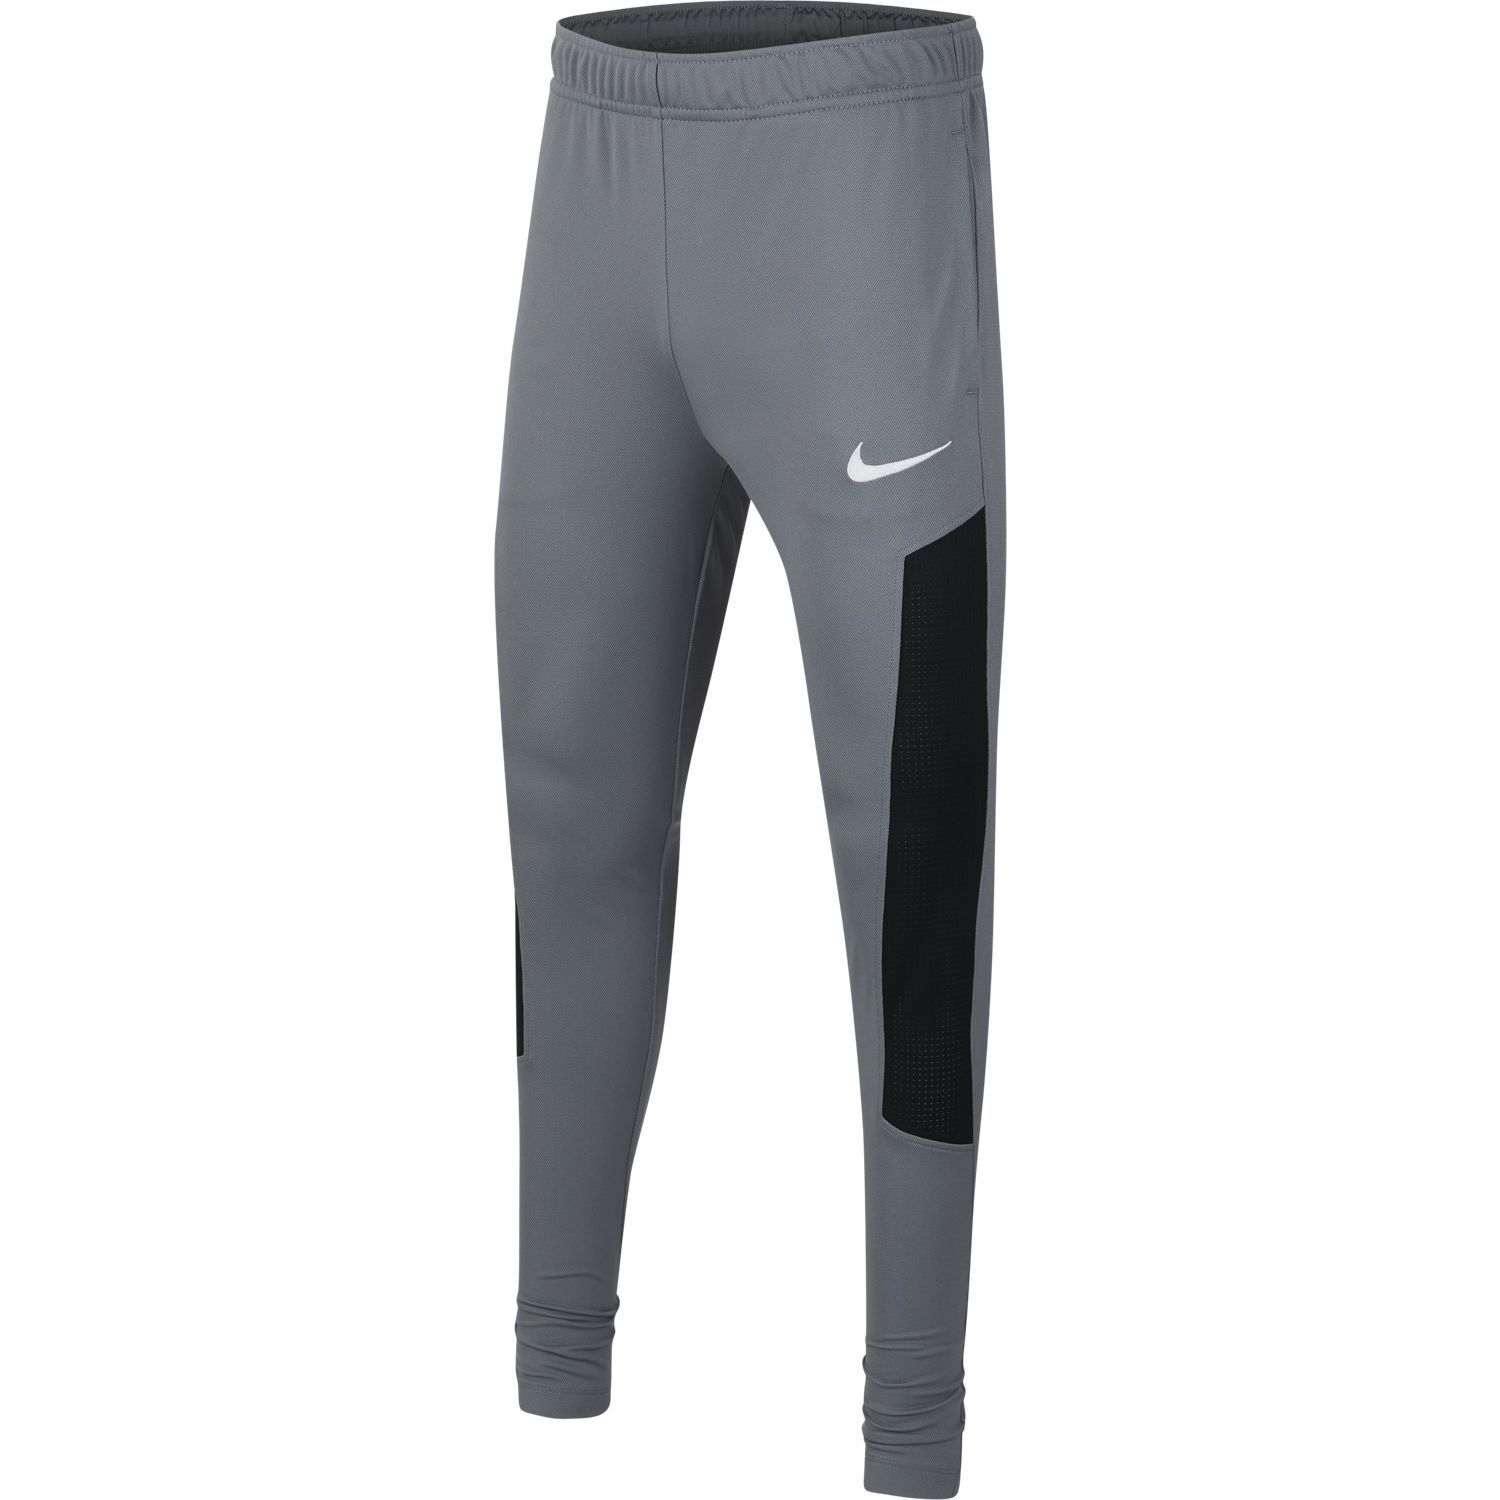 Boys Nike Pants - Bottoms, Clothing 